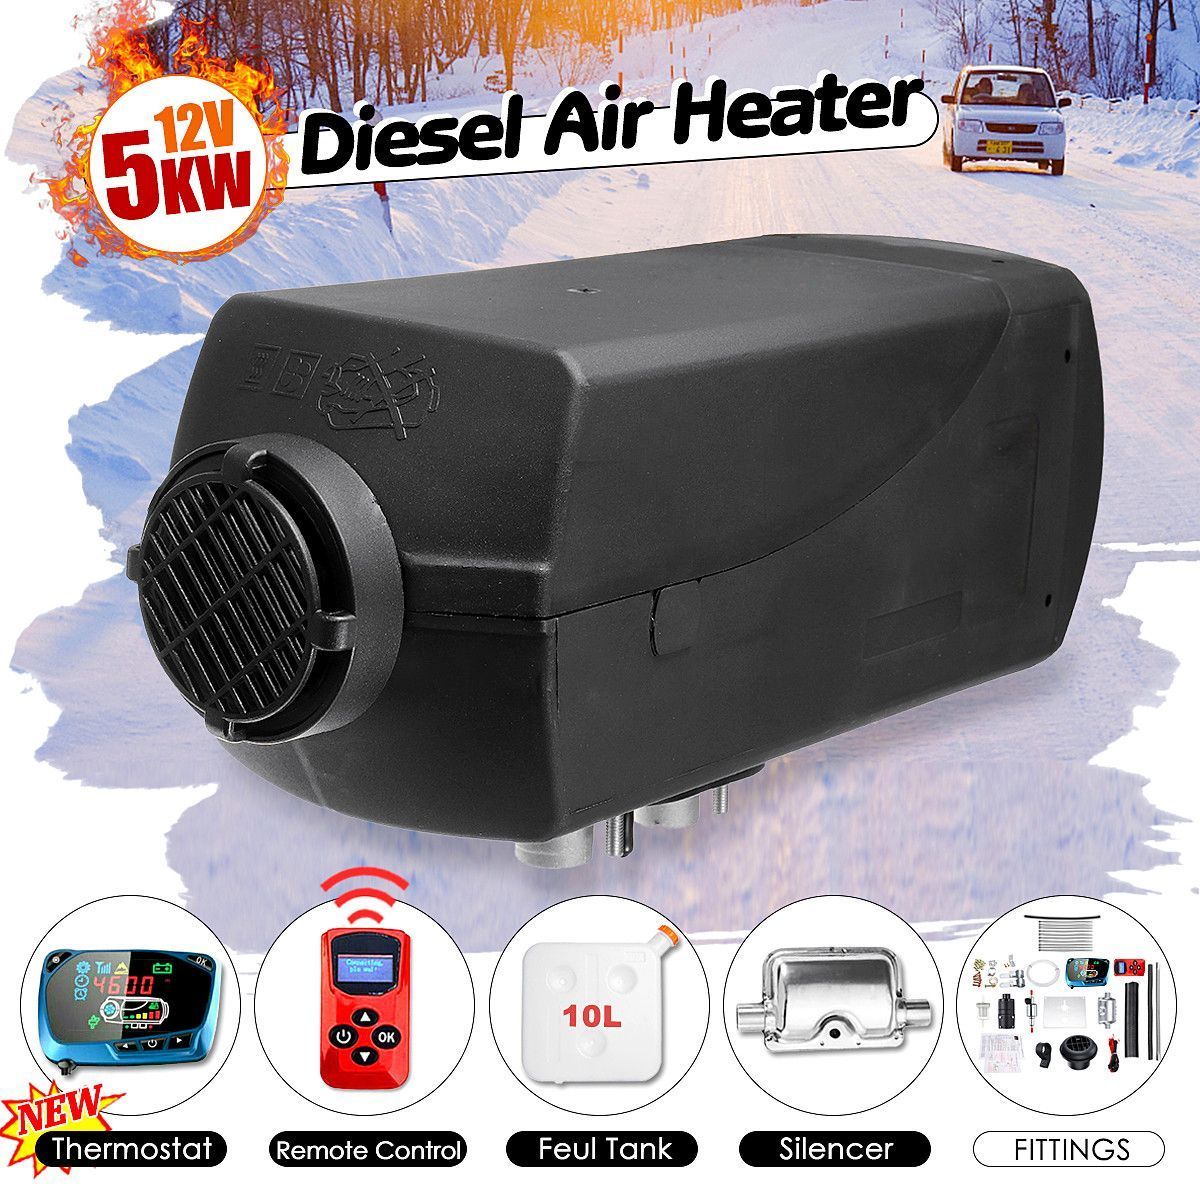 5KW12V-Diesel-Air-Heater-Upgrade-LCD-Thermostat-Parking-Heater-Warming-Equipment-Set-1379168